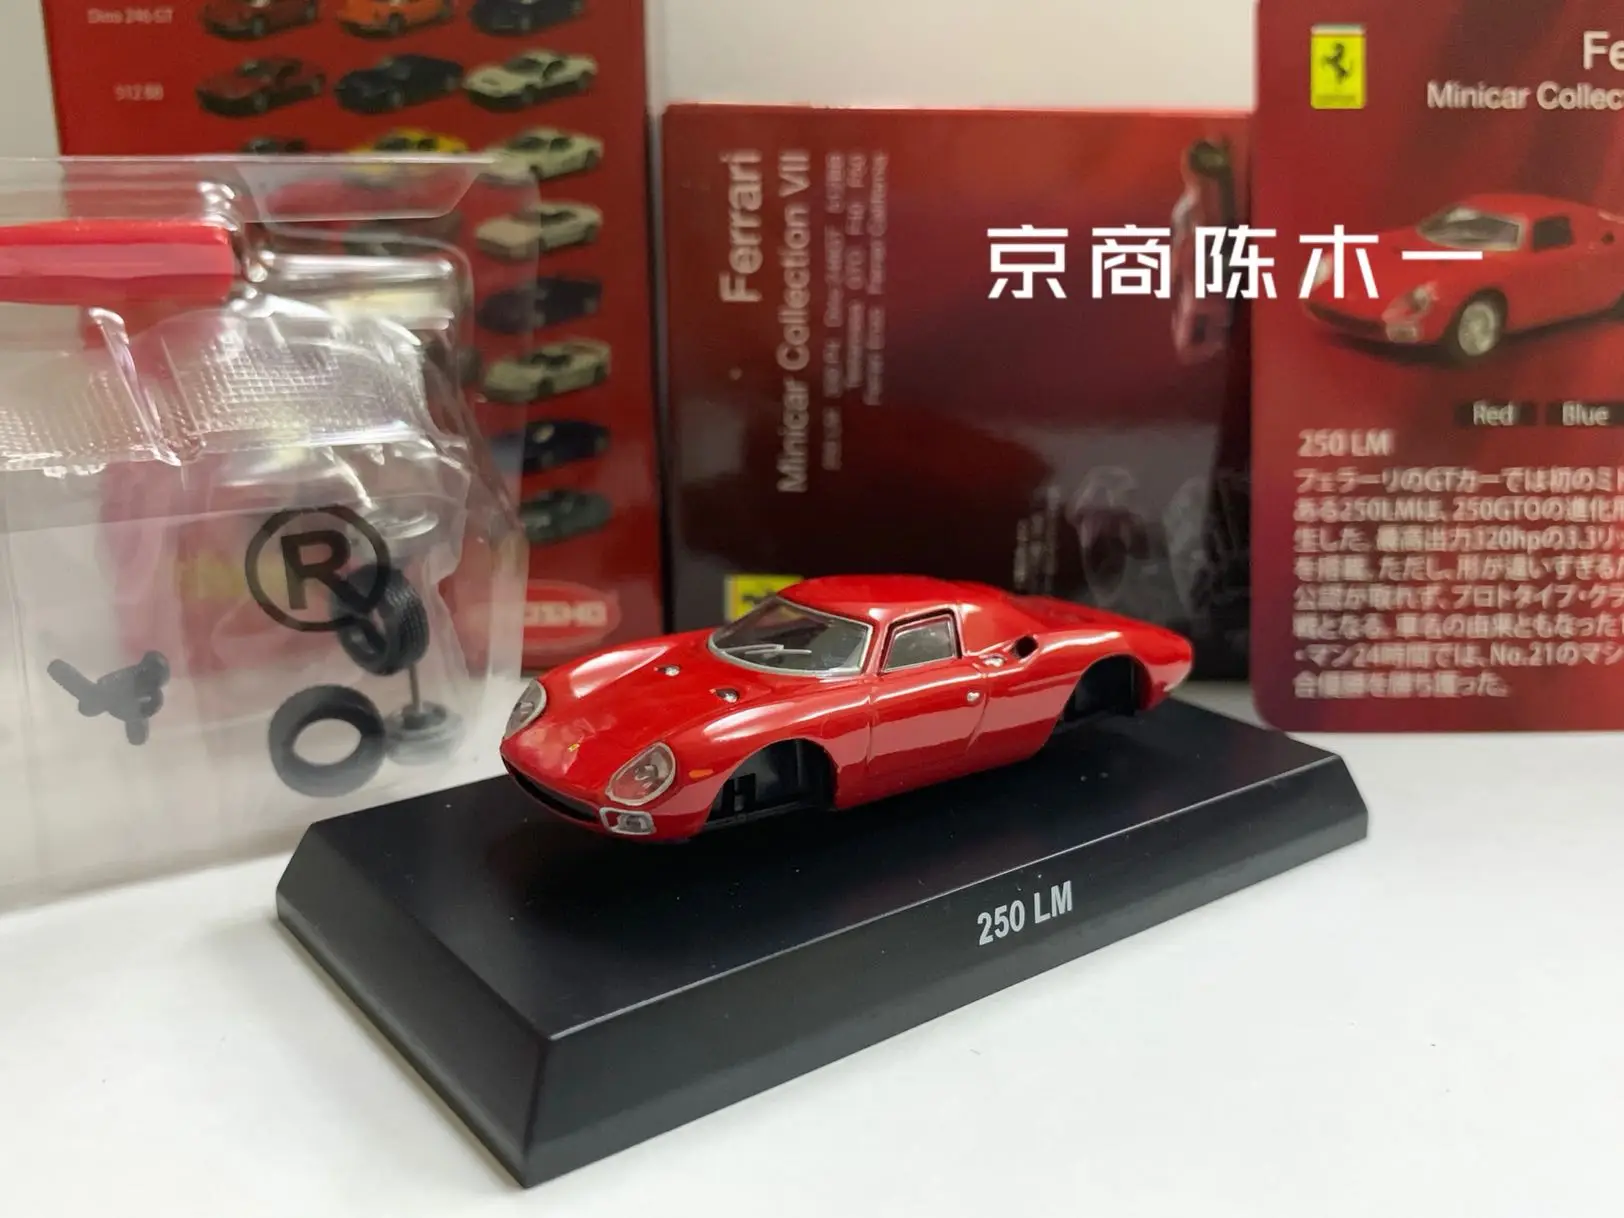 

1/64 KYOSHO Ferrari 250 LM Le mans racing car Collection of die-cast alloy assembled car decoration model toys